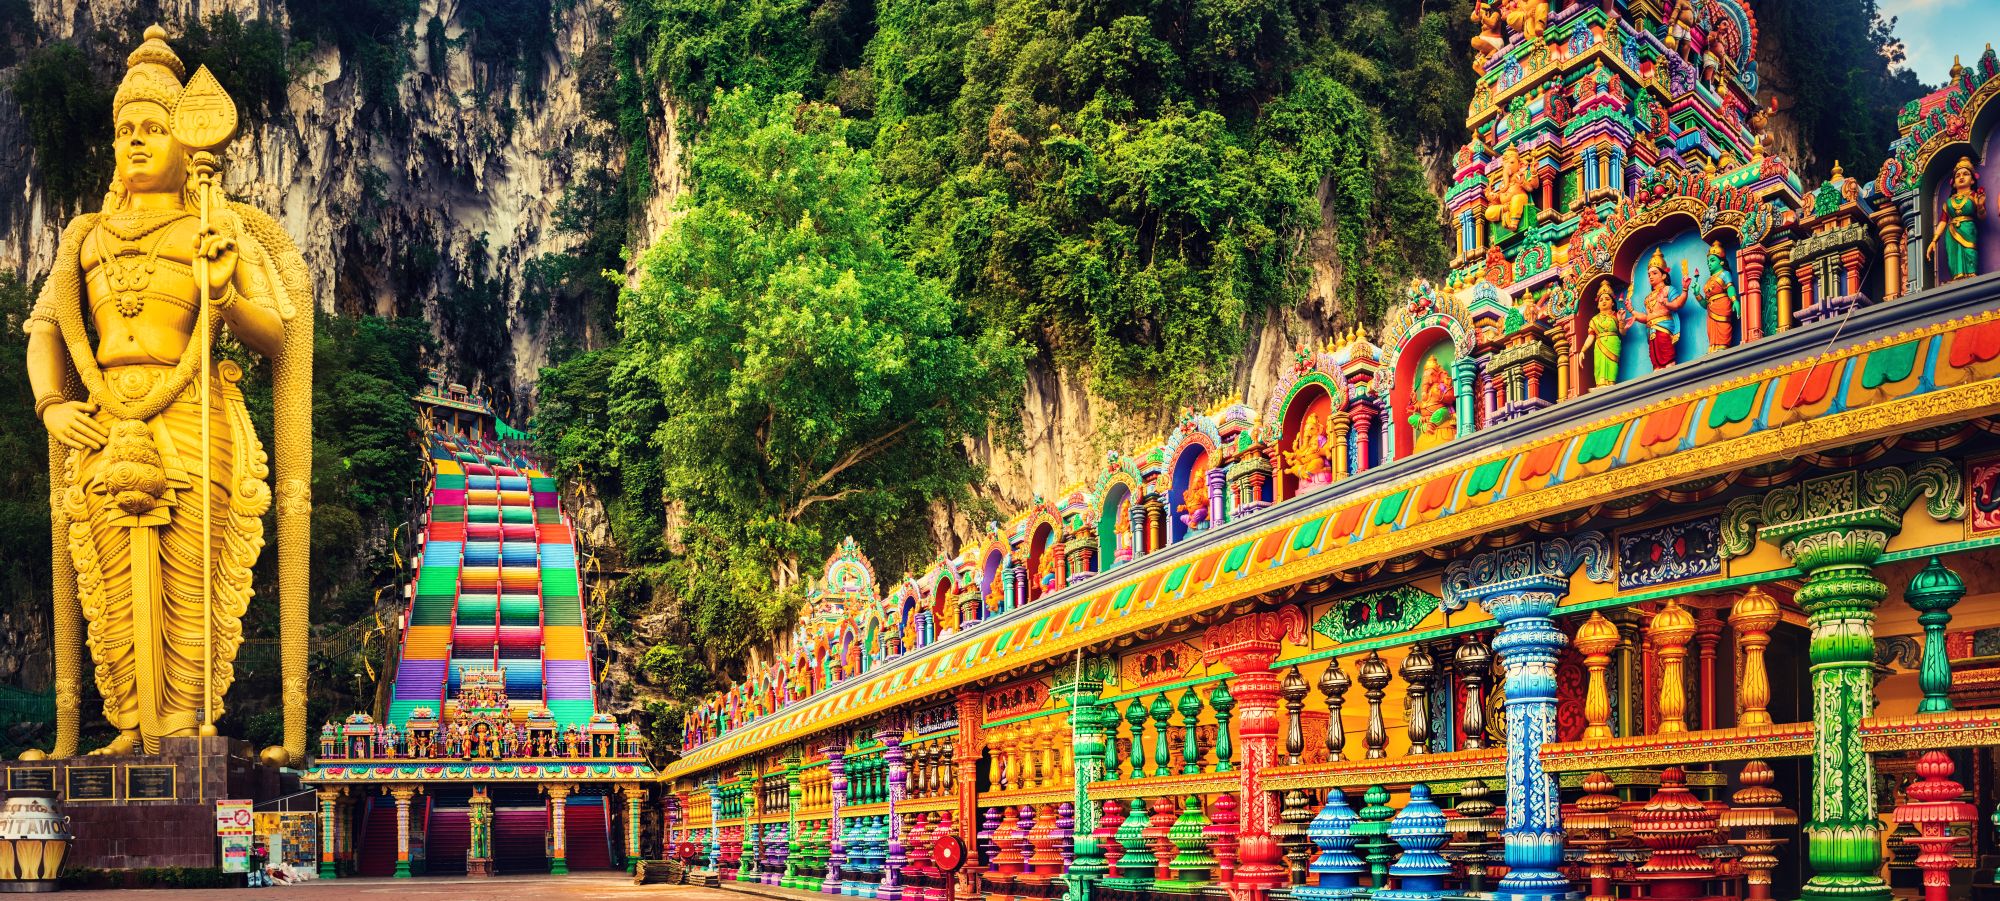 Maleisie Kuala Lumpur Batu Caves met vele kleuren